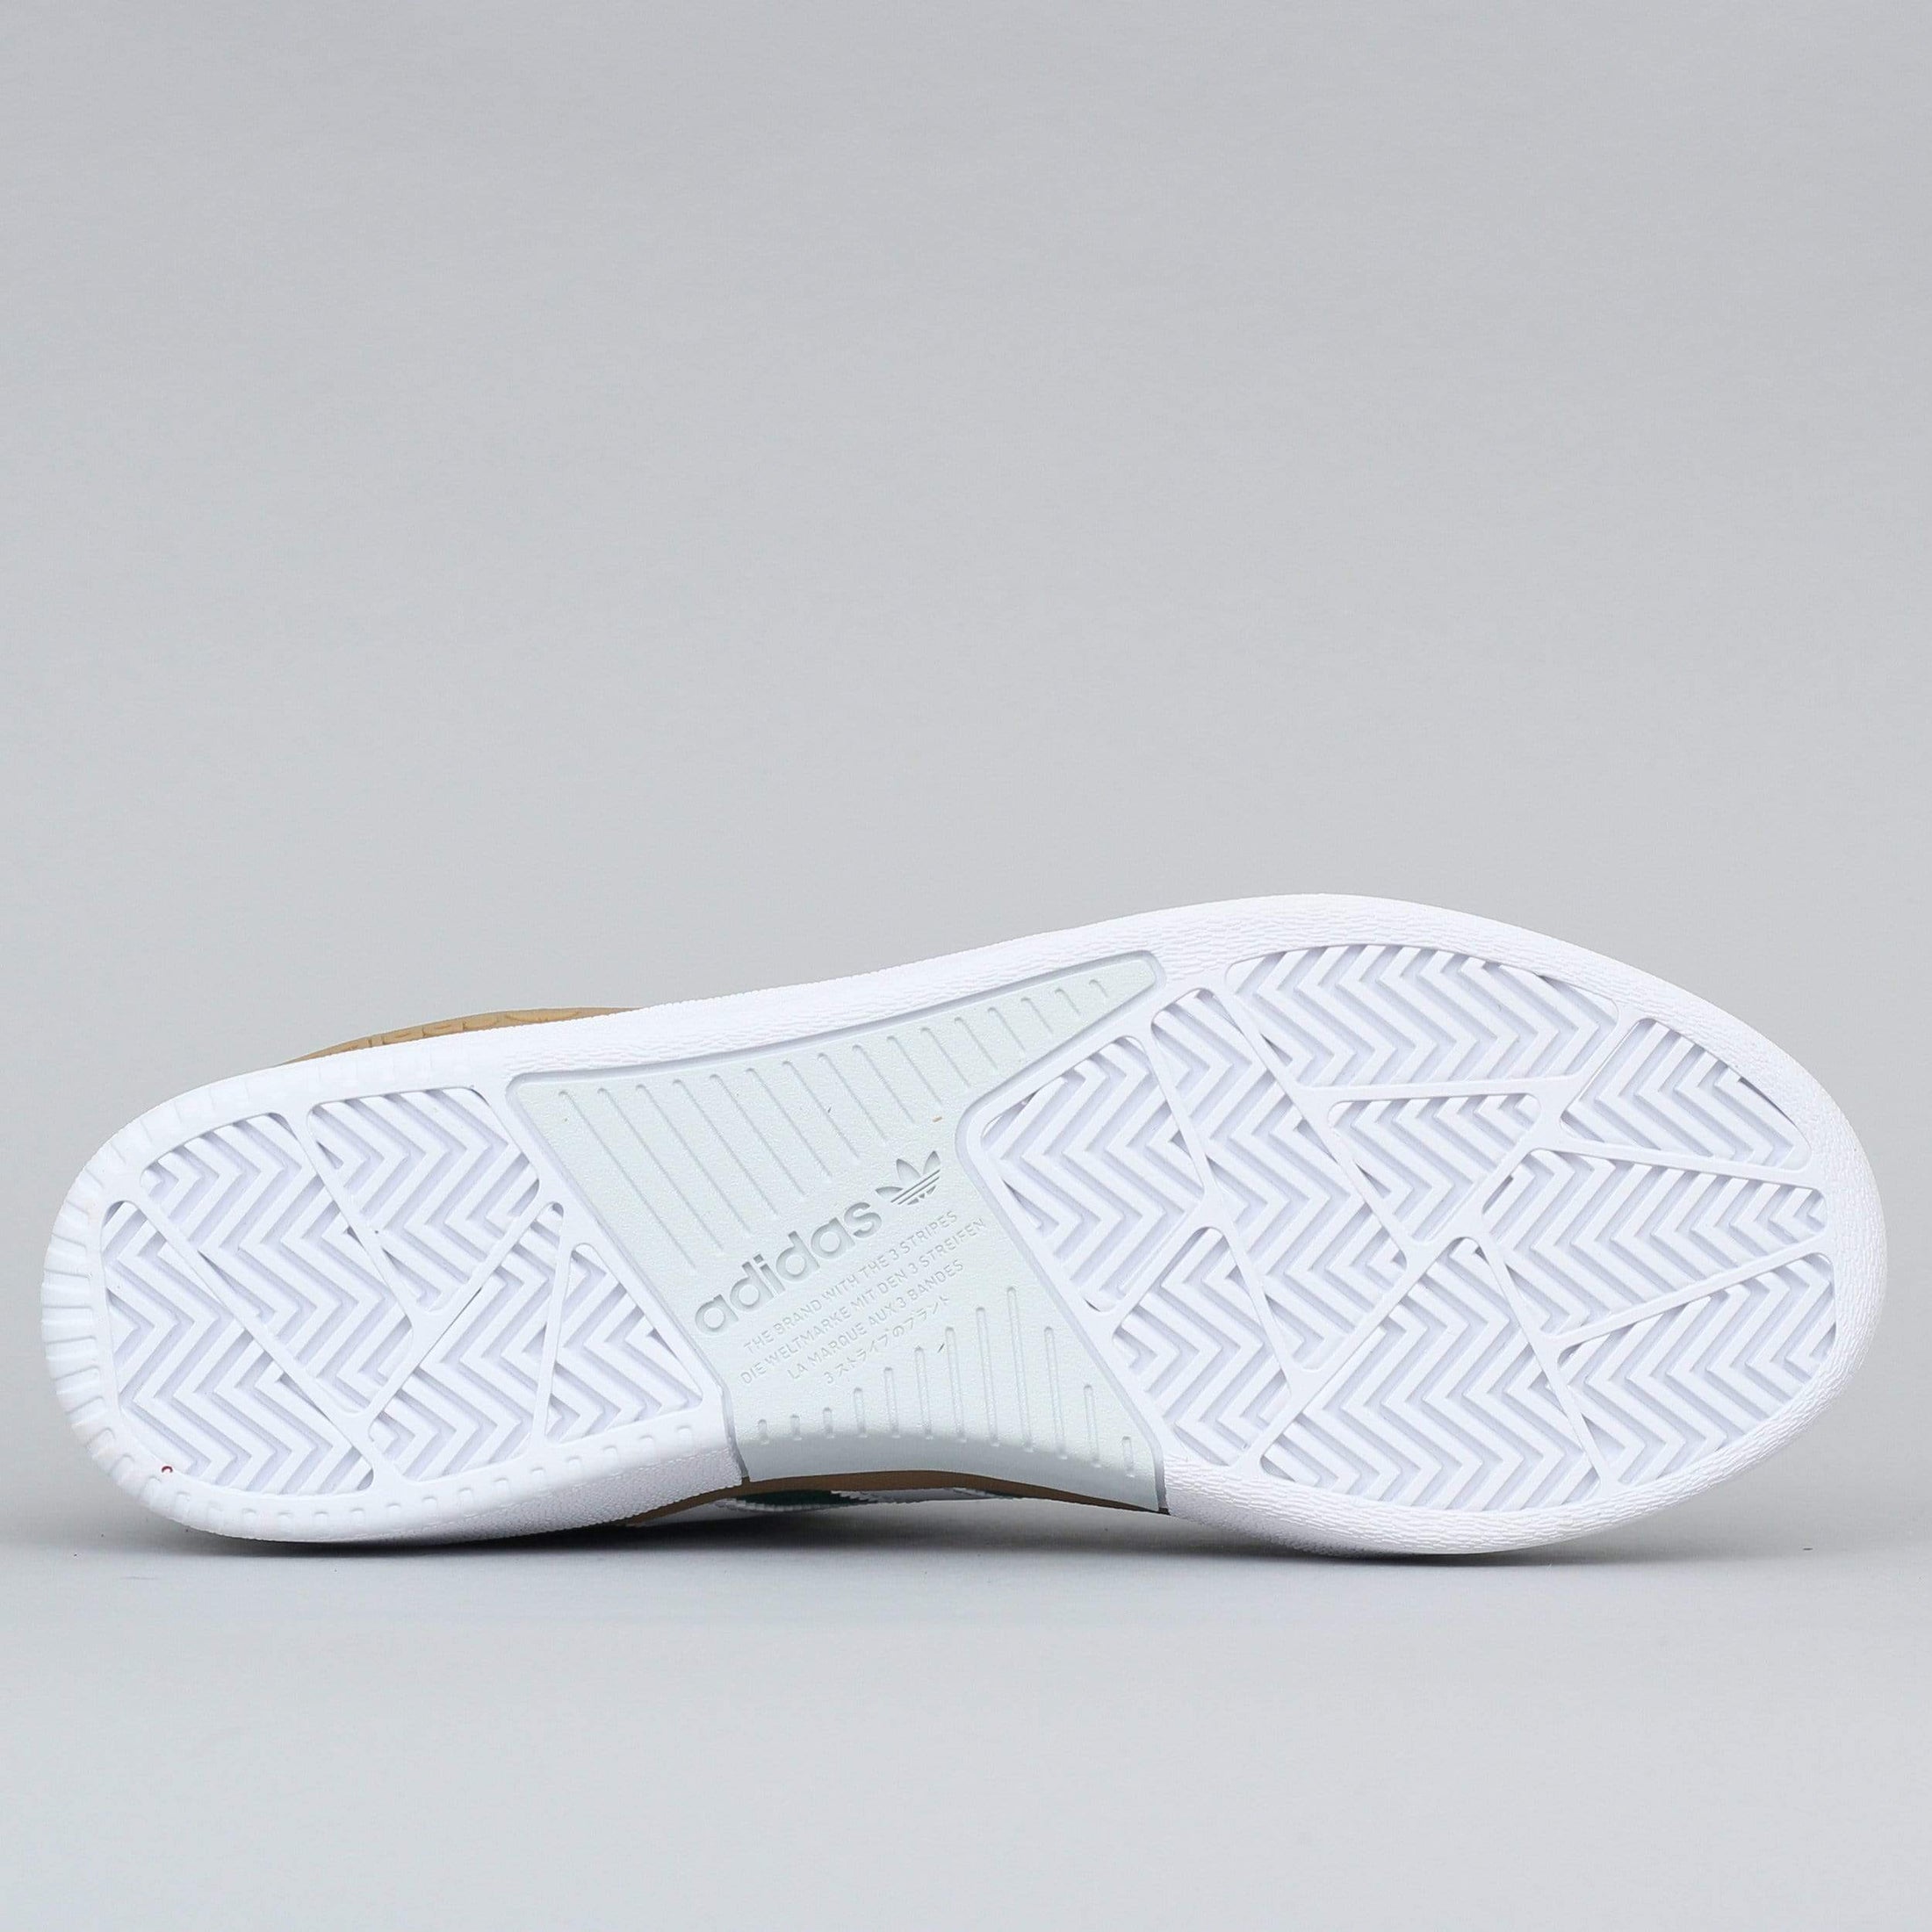 adidas Tyshawn Shoes Collegiate Green / Footwear White / Gum4